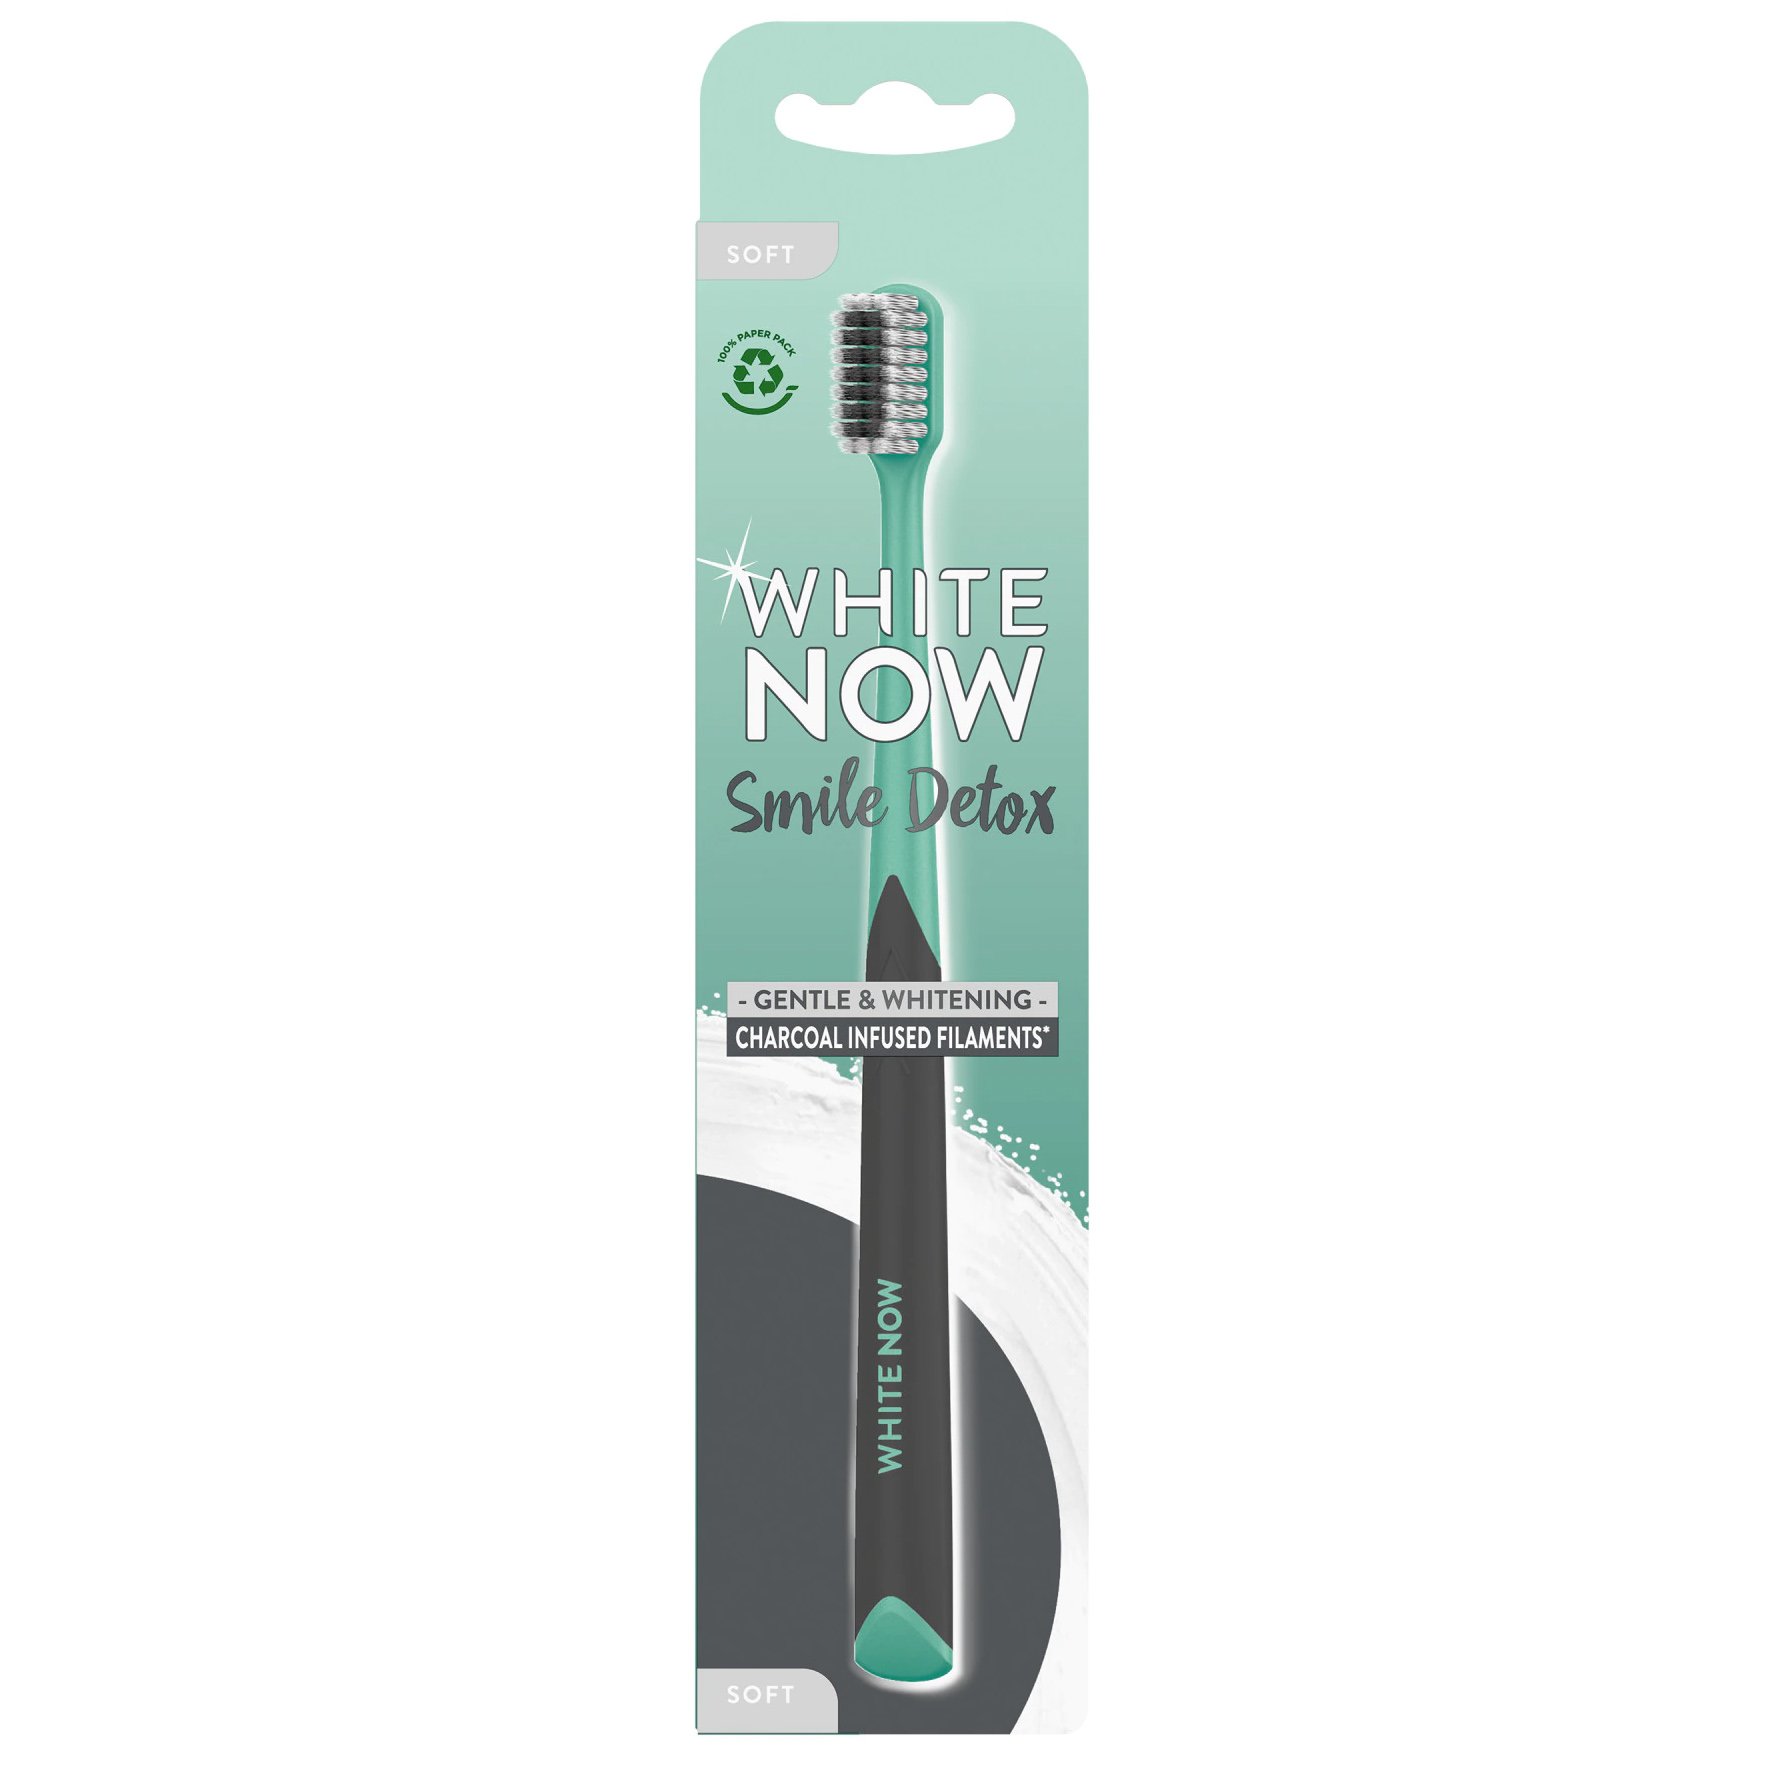 Aim White Now Smile Detox Soft Toothbrush Οδοντόβουρτσα με Τεχνολογία Charcoal για Εντατικό Καθαρισμό 1 Τεμάχιο